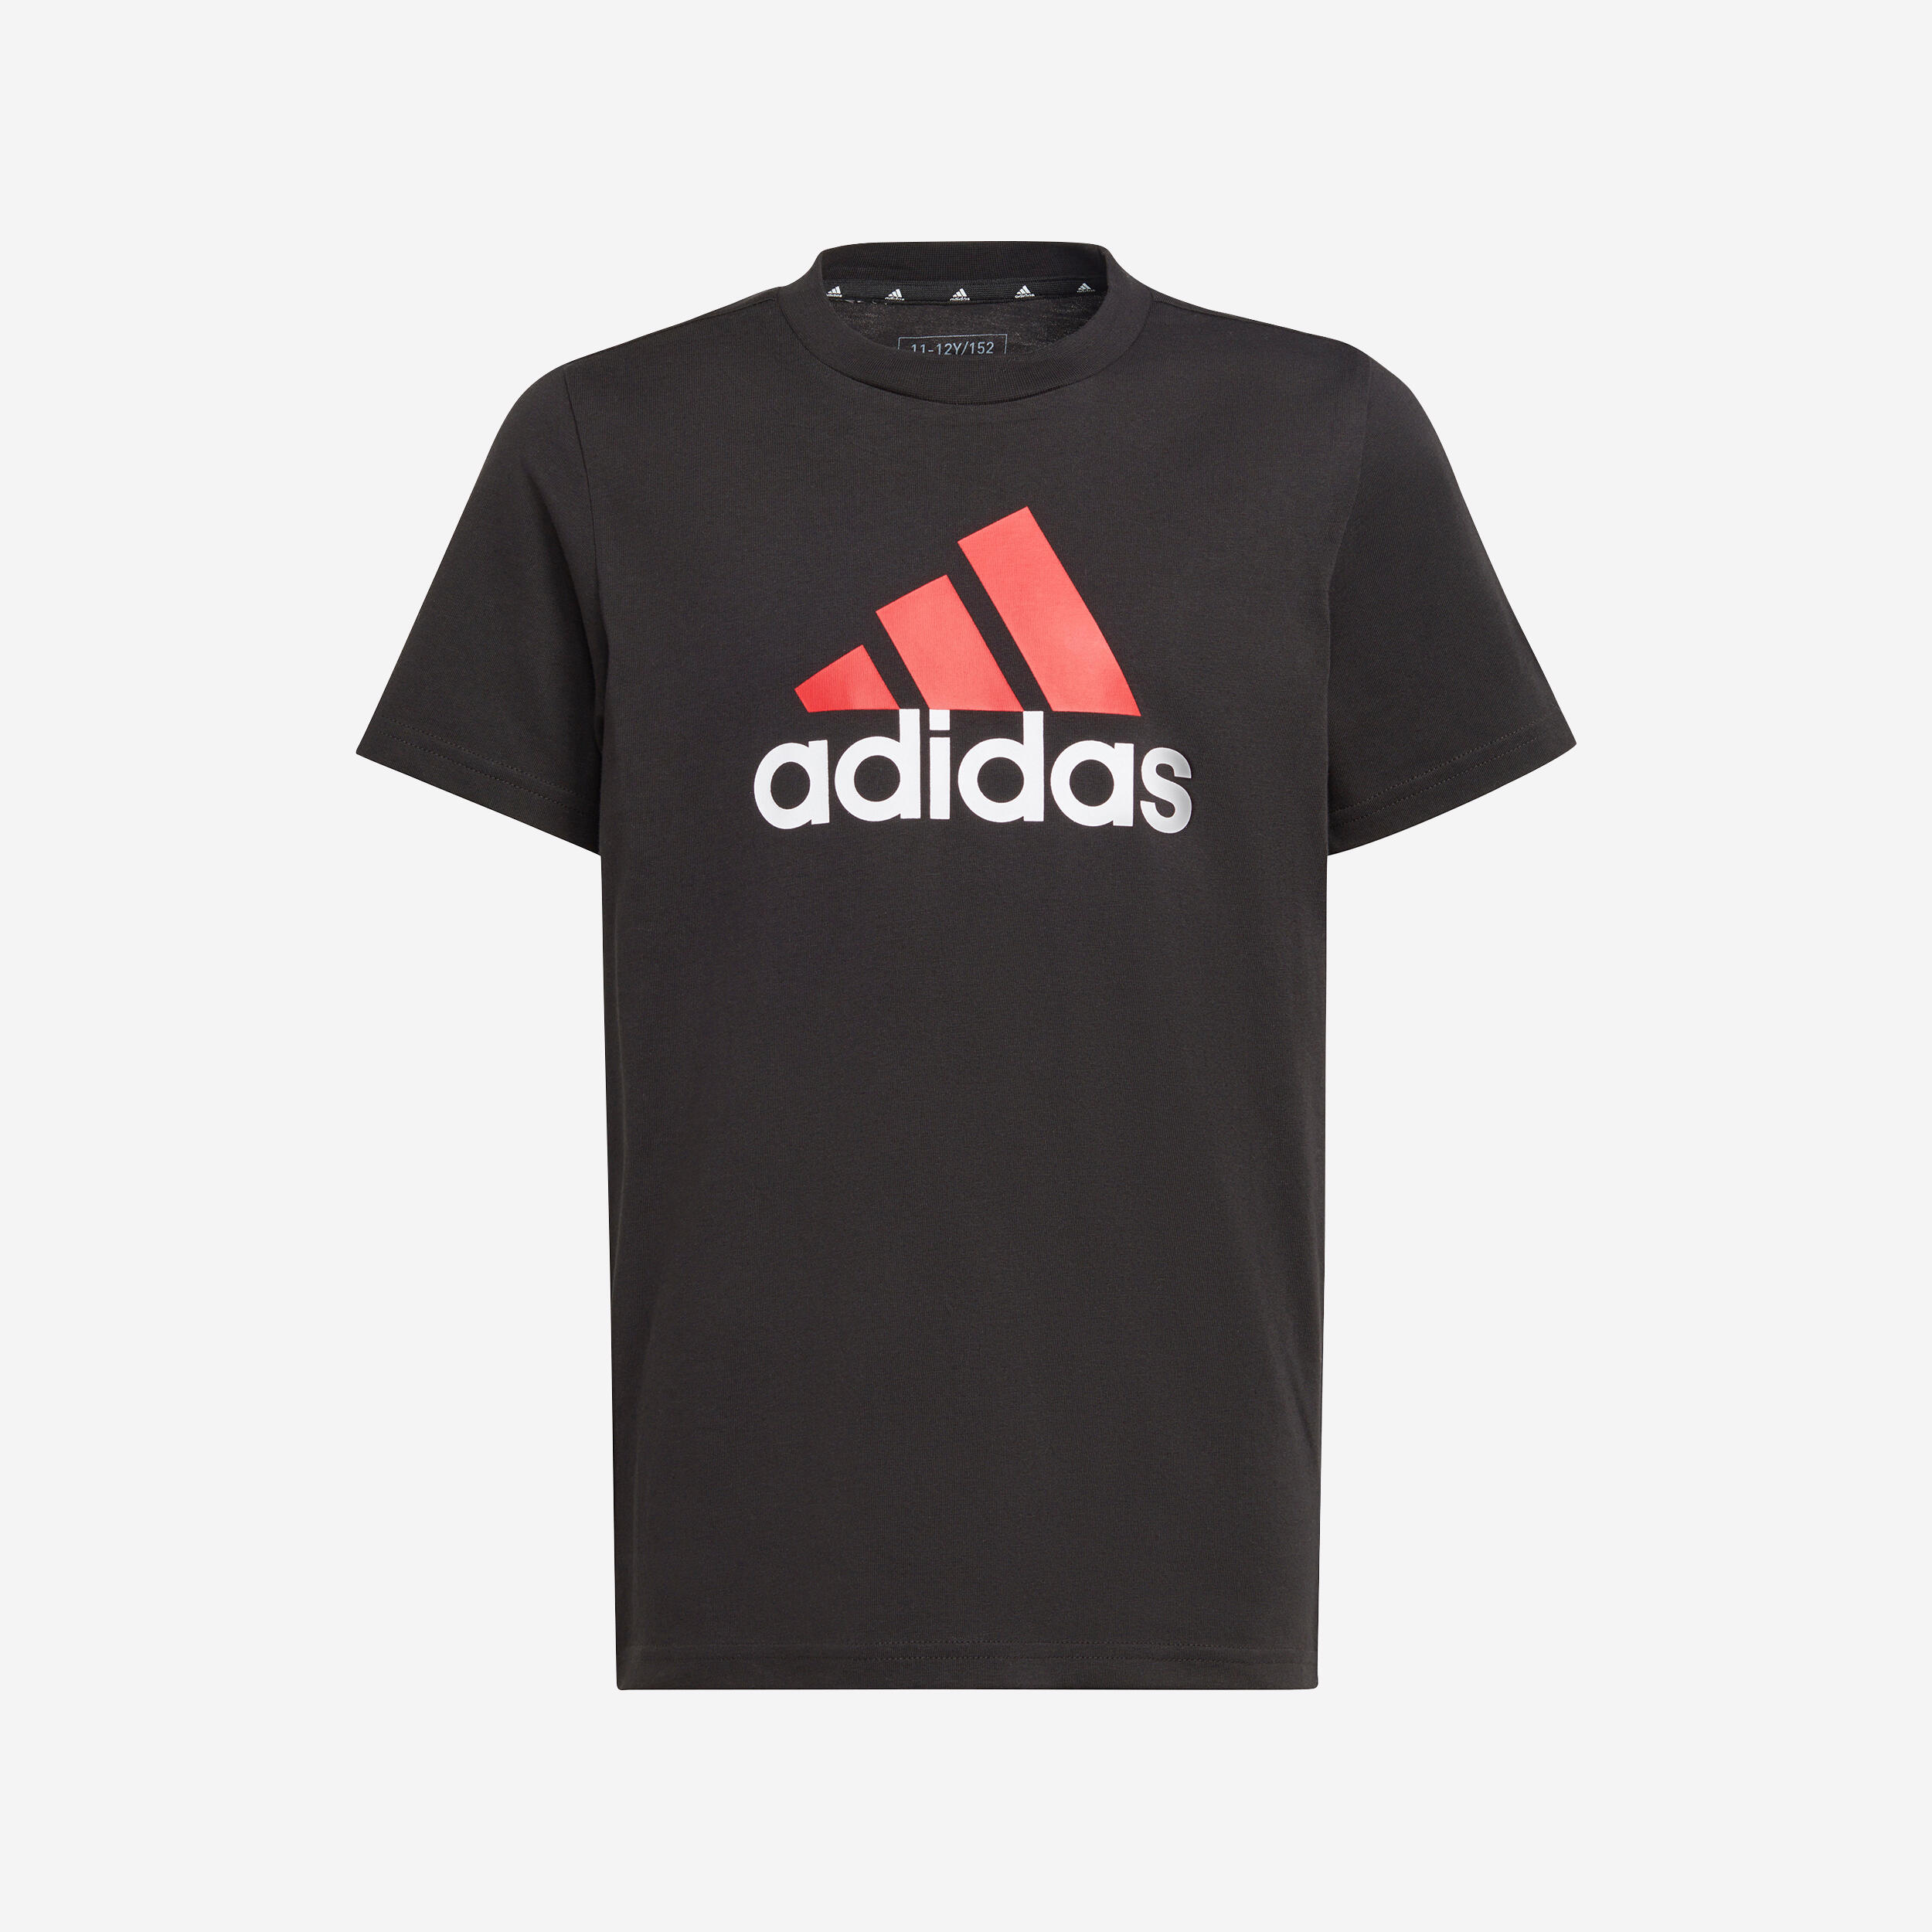 ADIDAS T-Shirt Kinder - schwarz mit rotem Logo